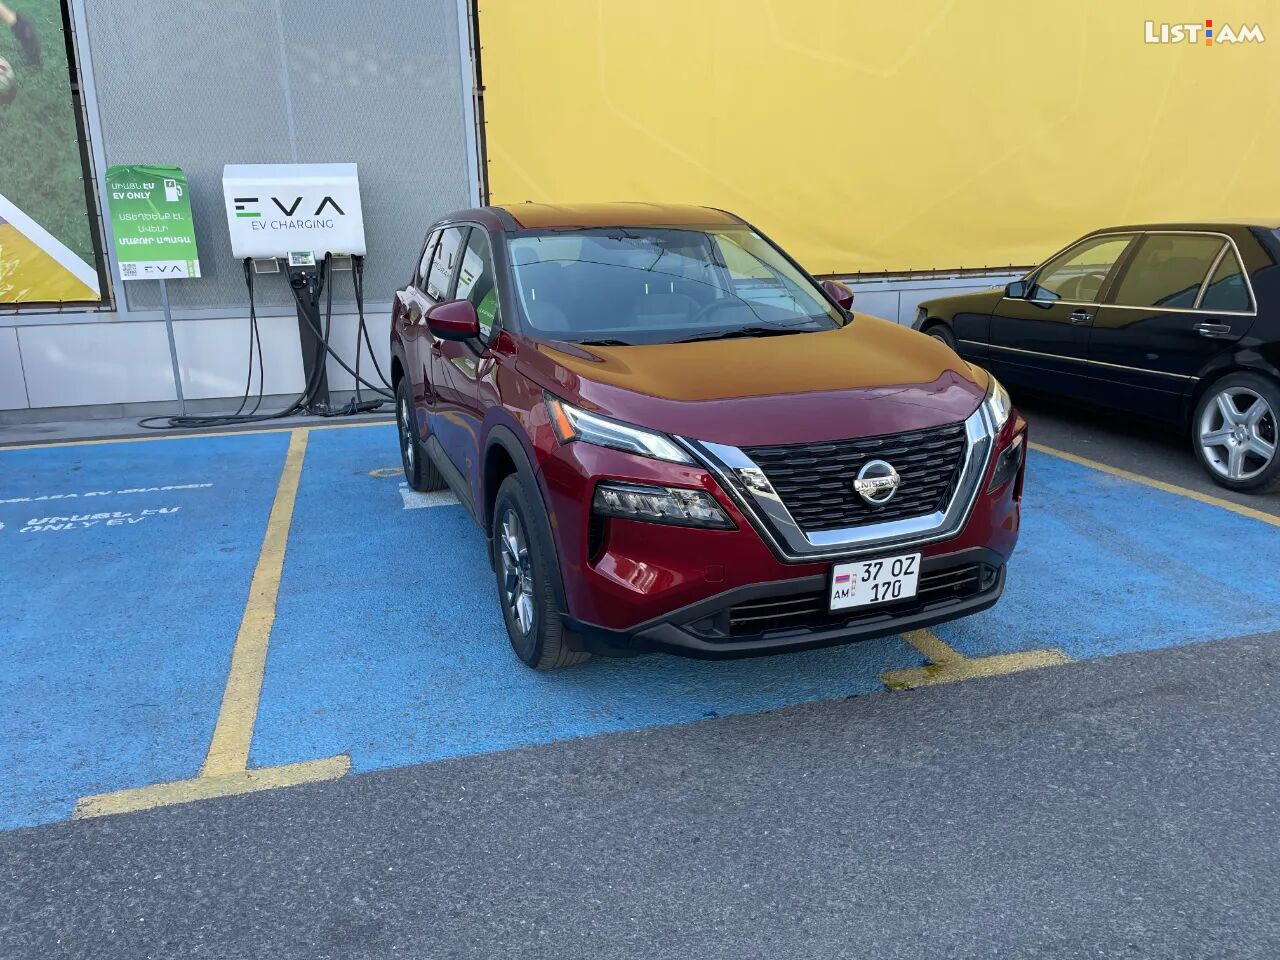 Nissan Rogue, 2.5